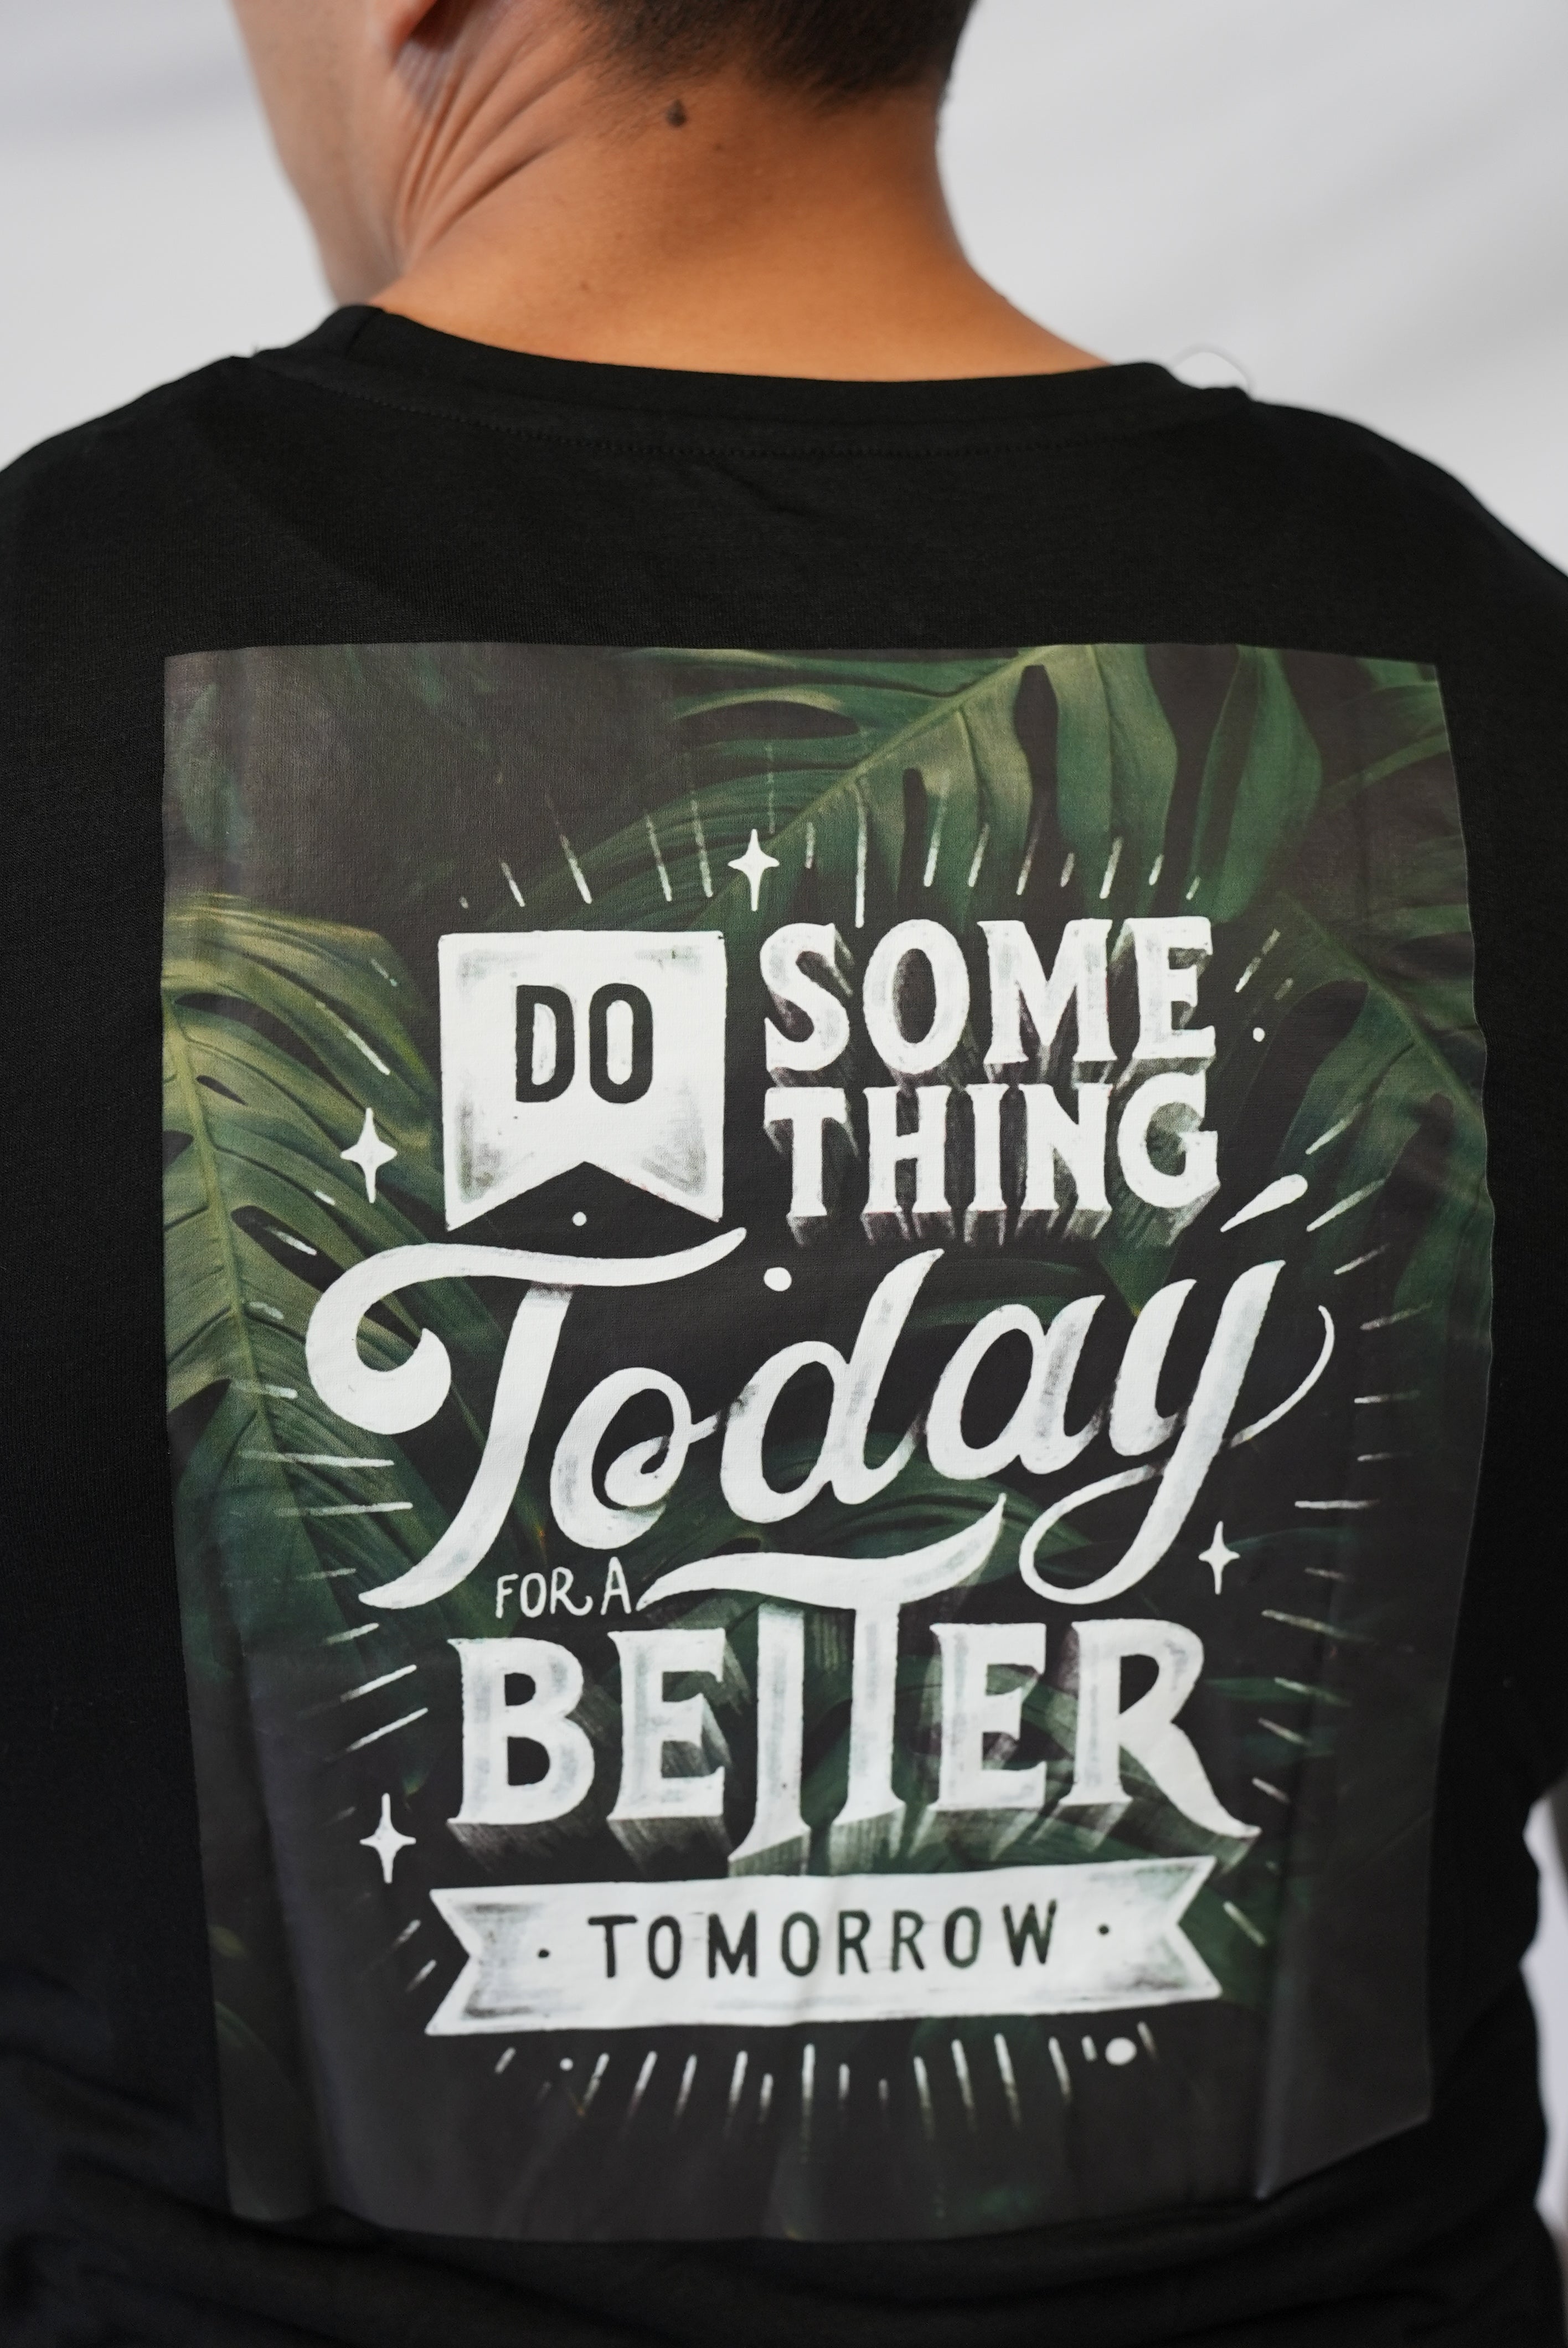 Do something today better